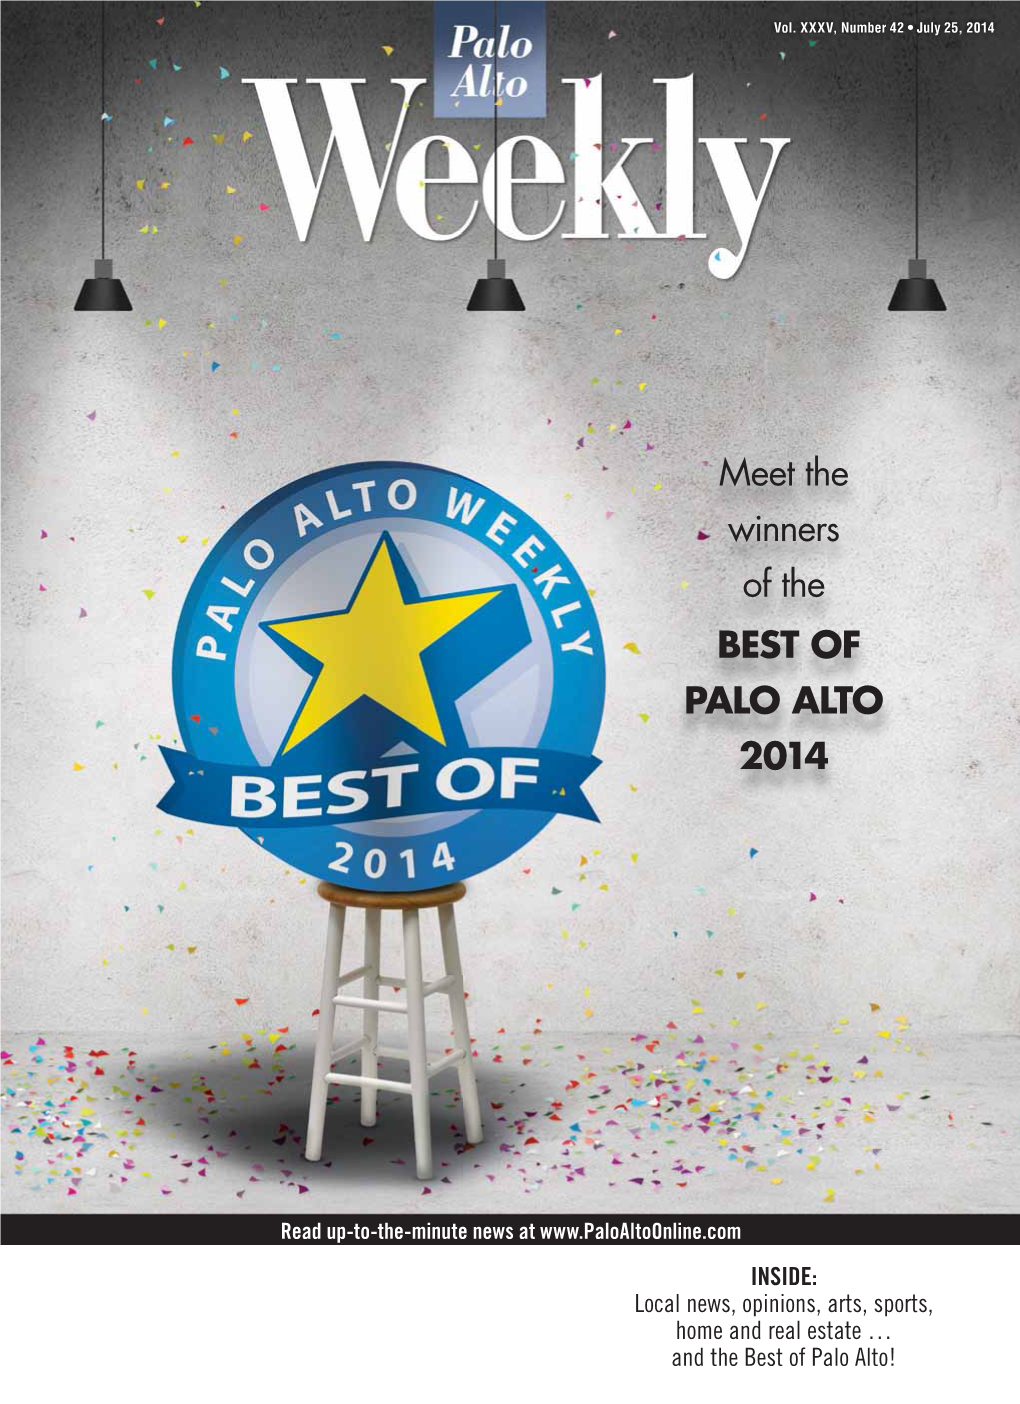 Meet the Winners of the BEST of PALO ALTO 2014